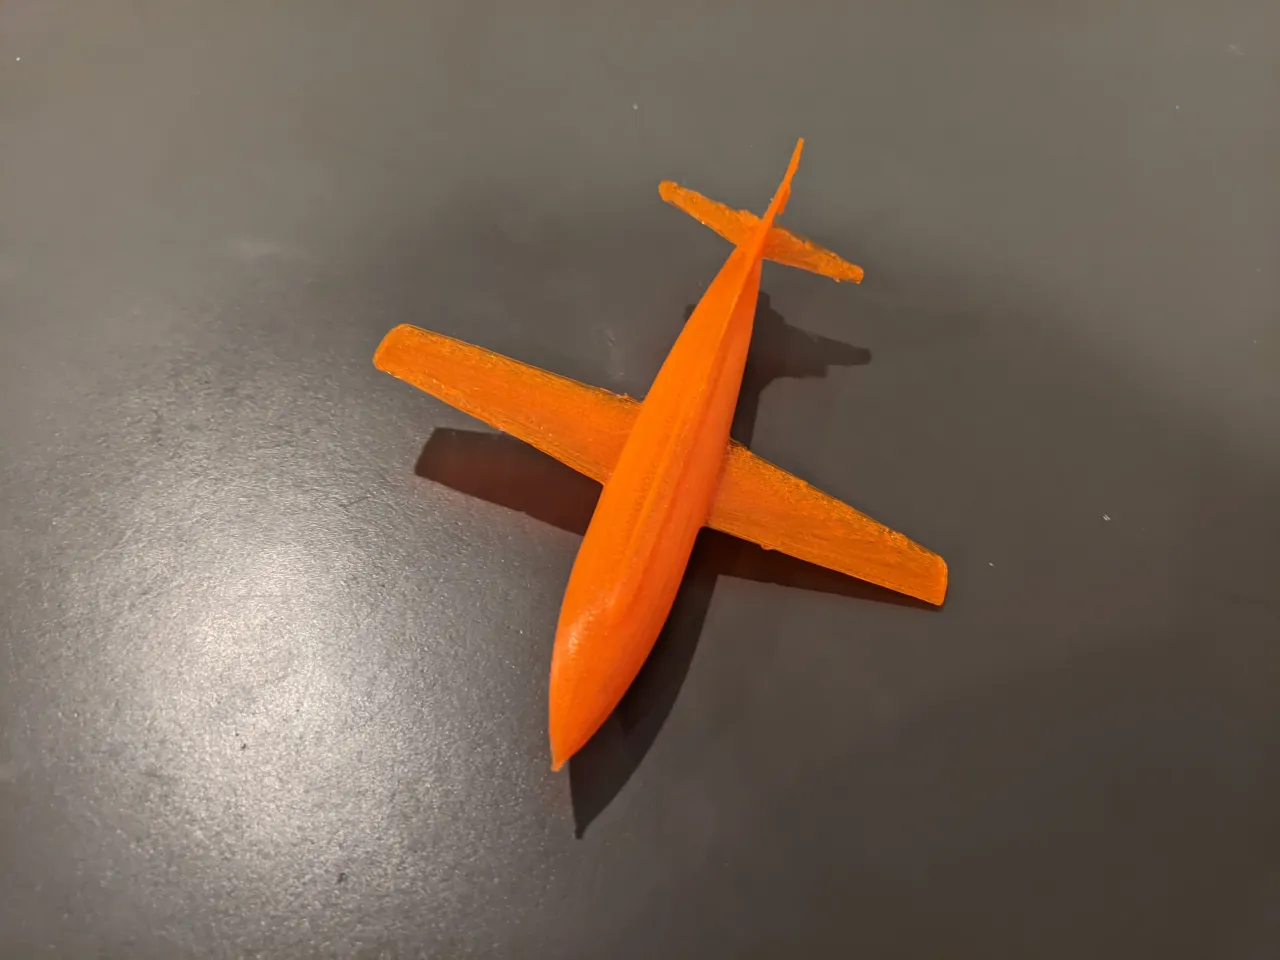 bell x 1 plane model